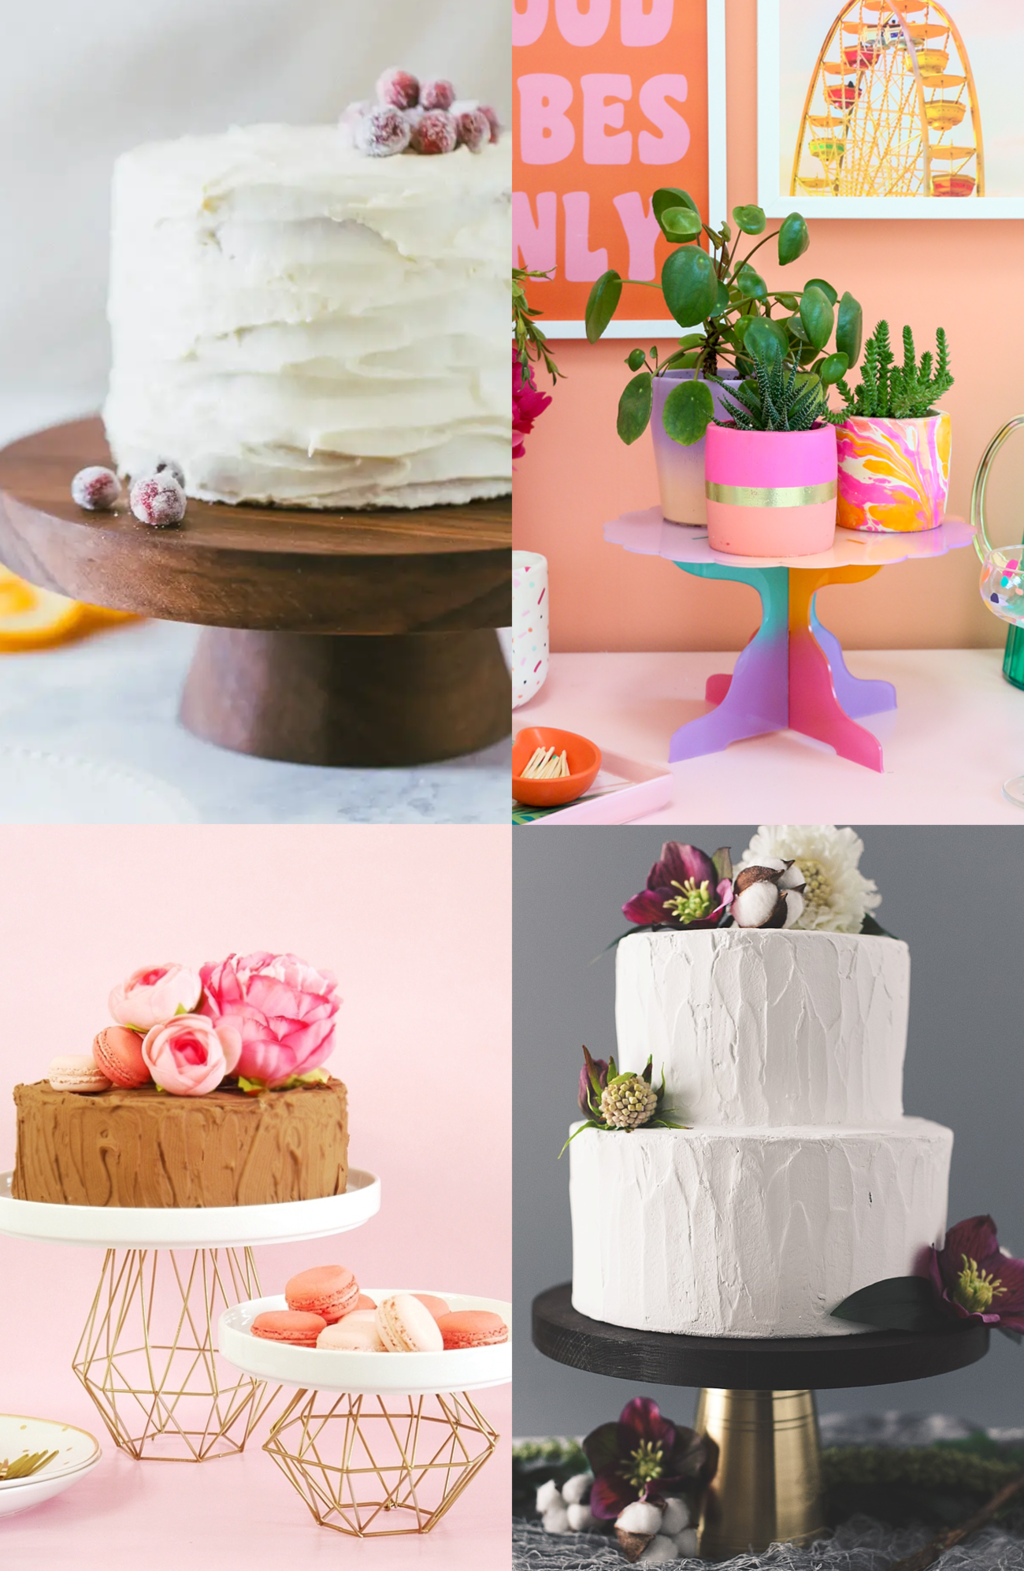 DIY Cake Stand Ideas